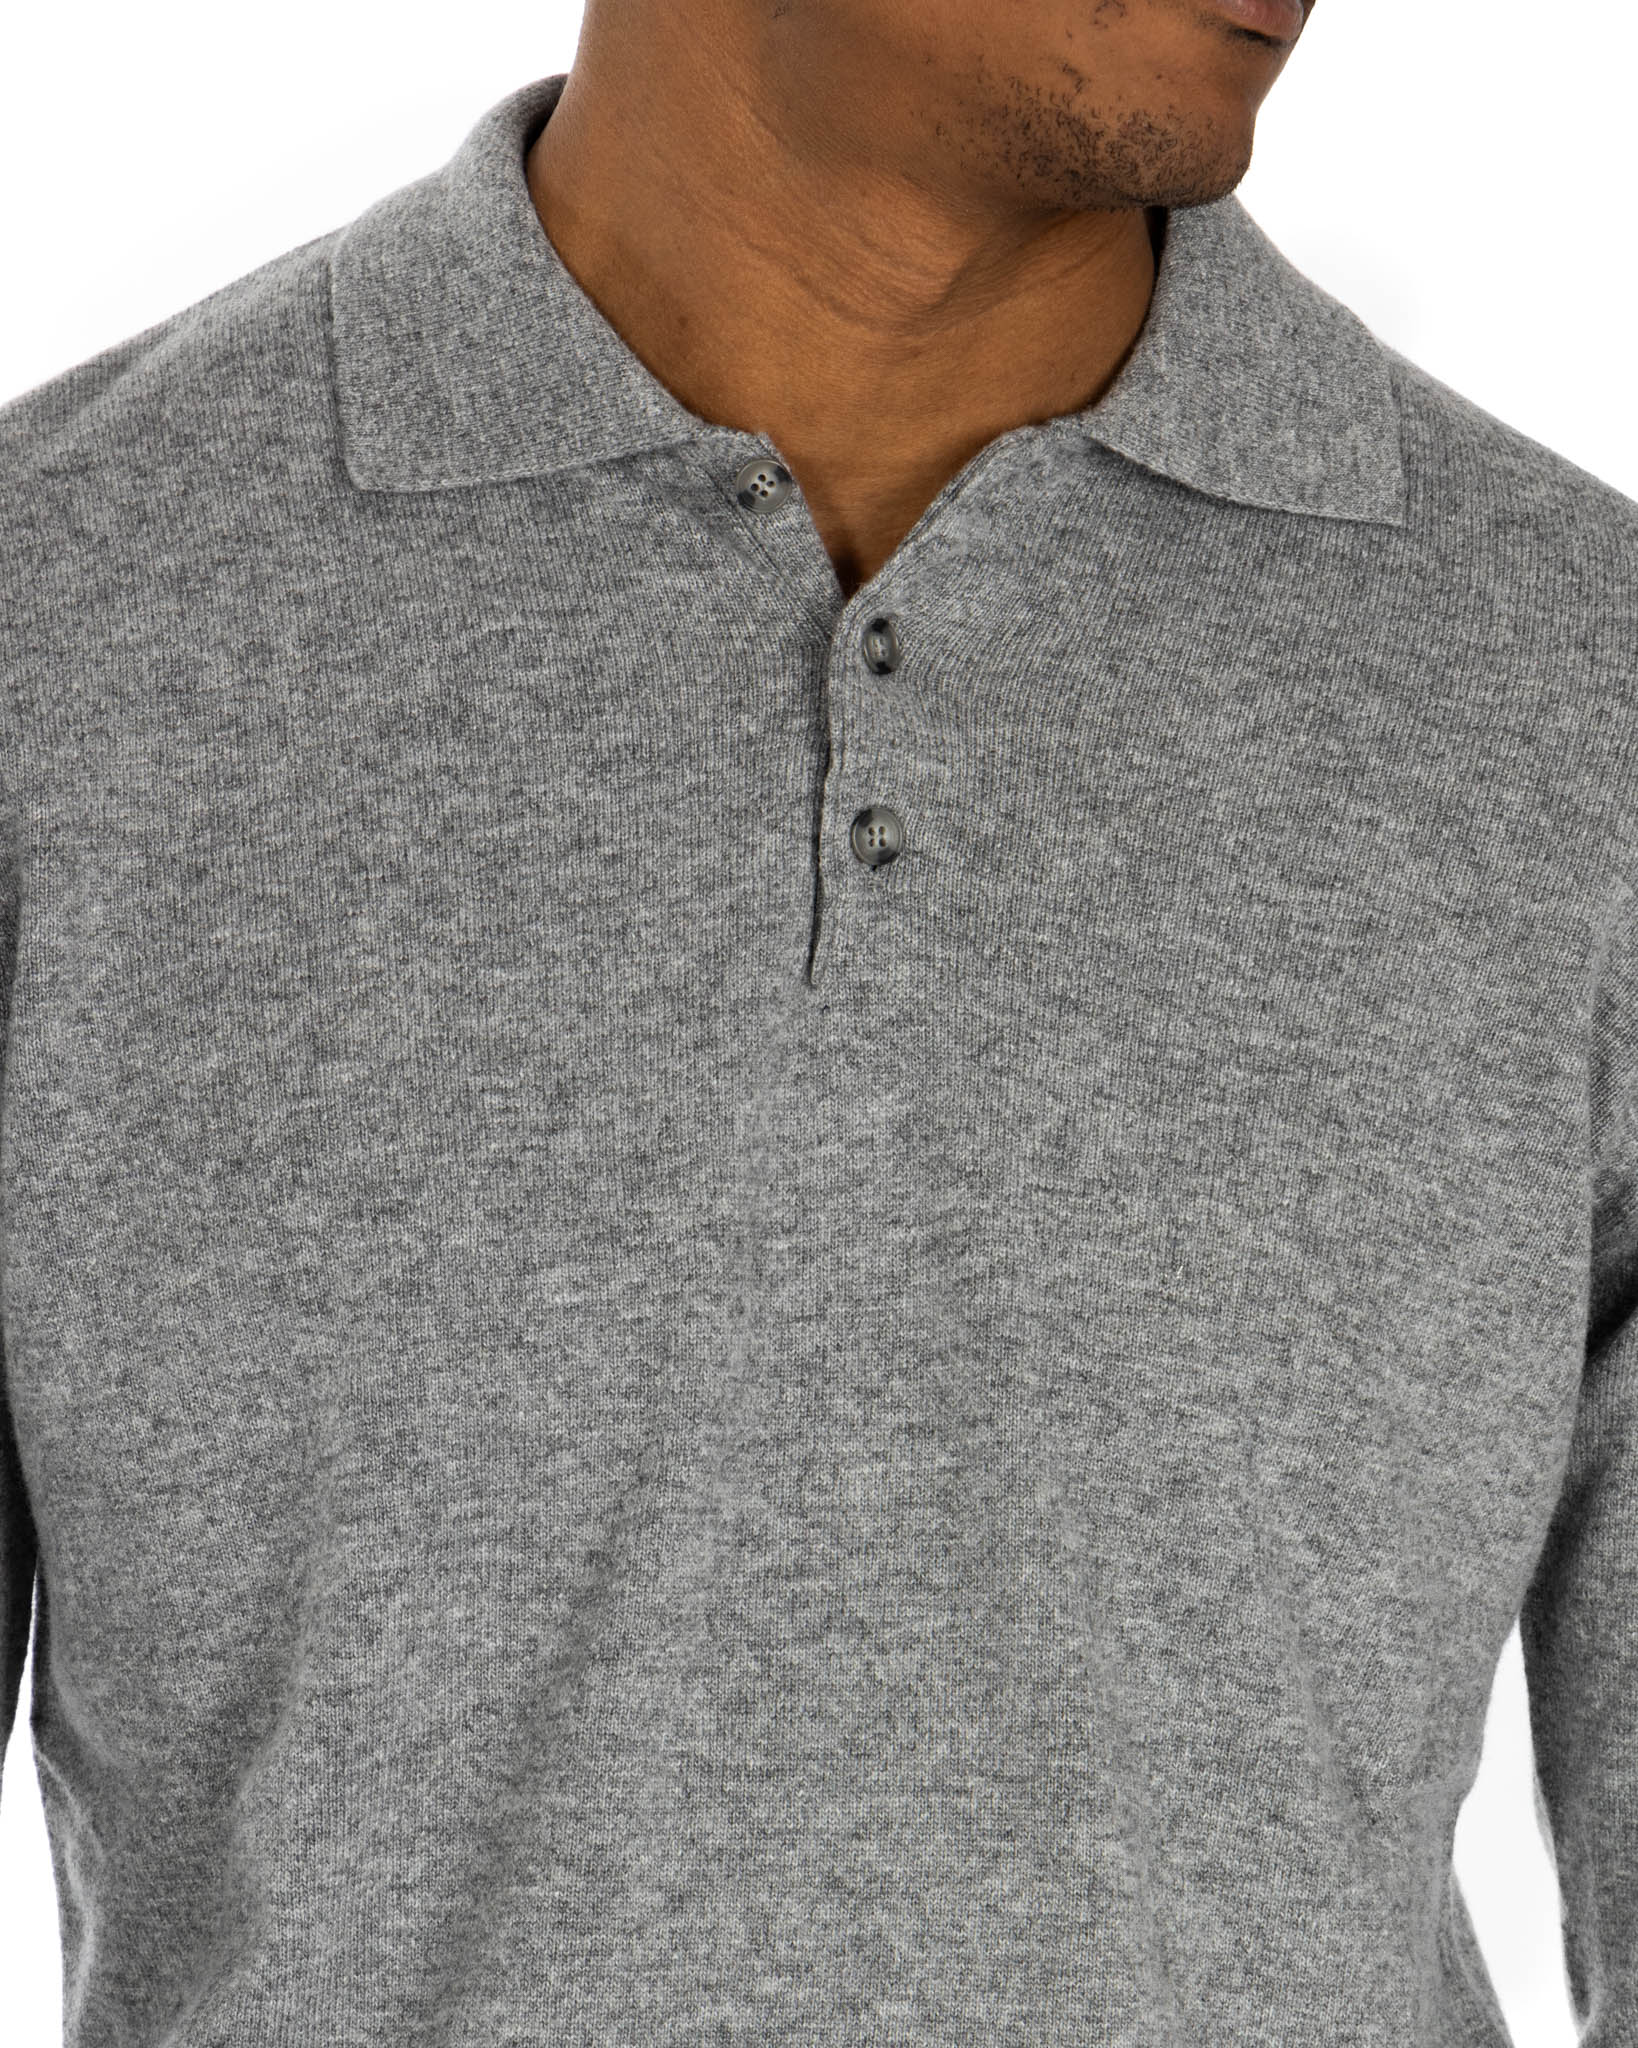 Tiger - gray cashmere blend polo shirt